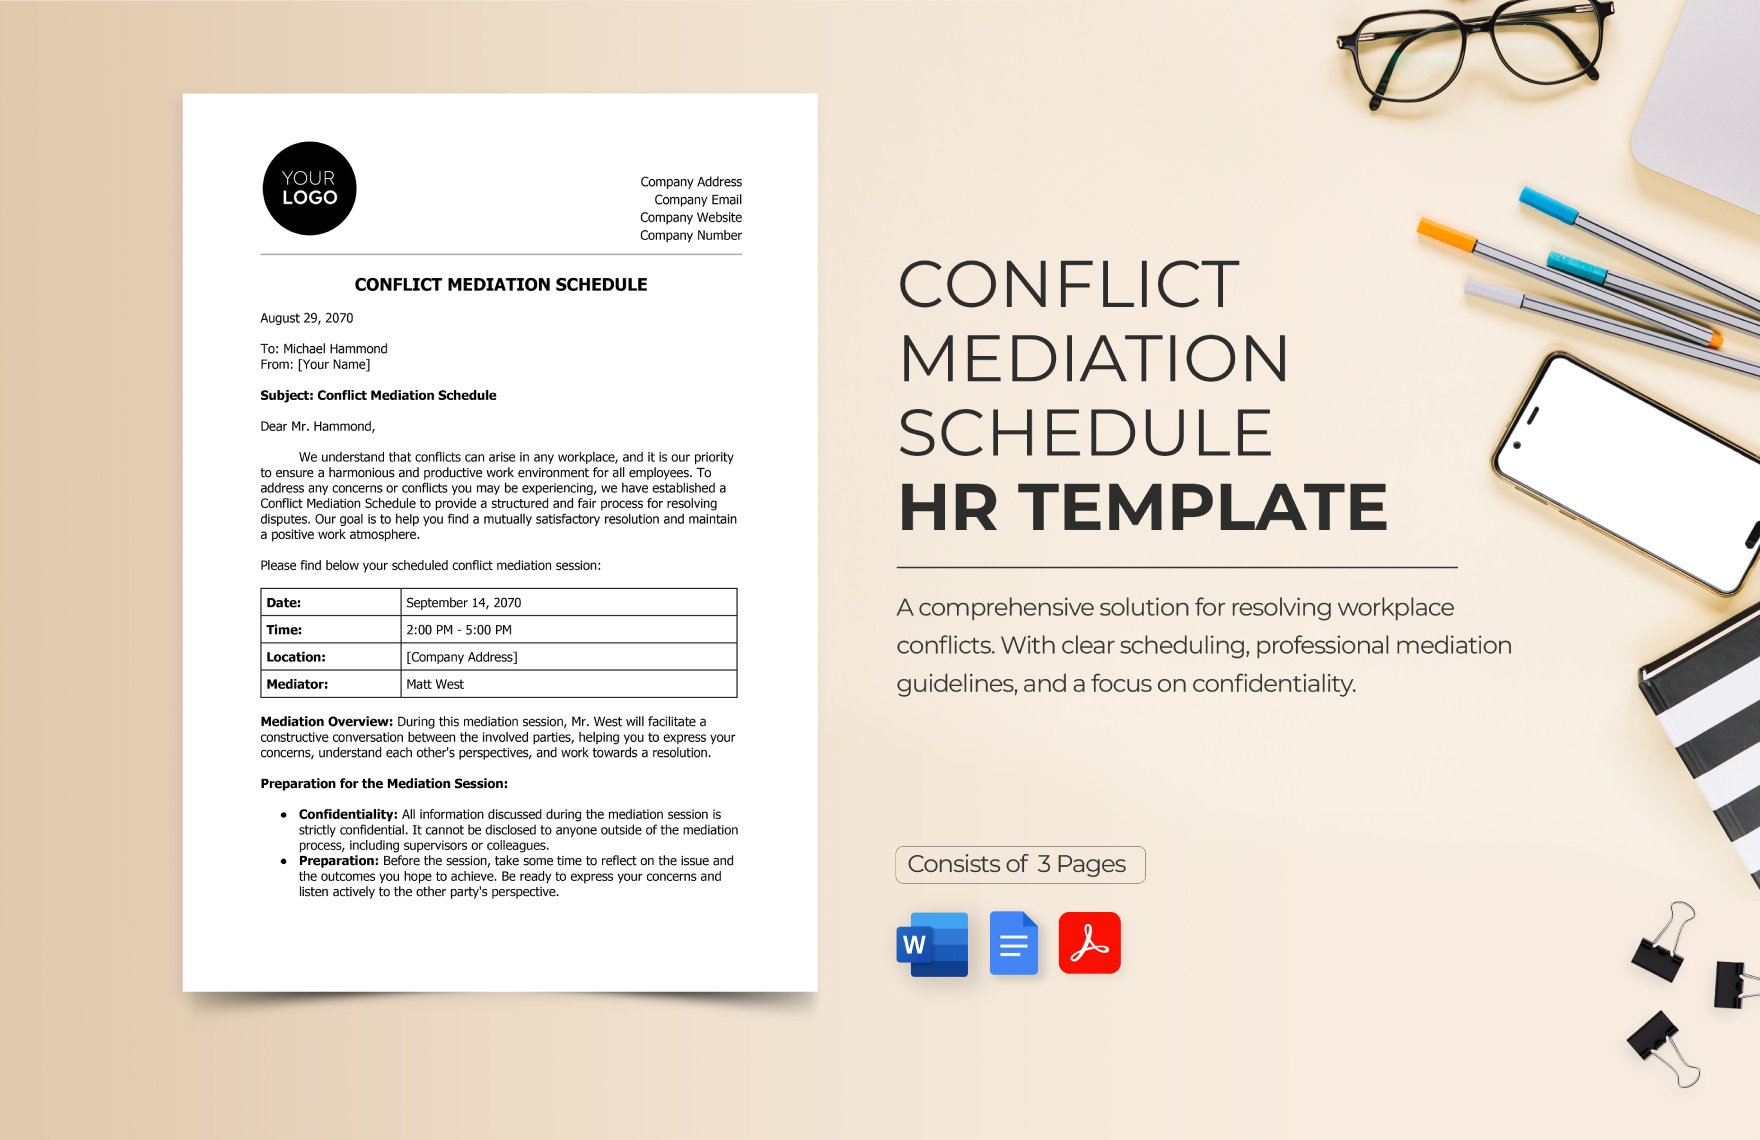 Conflict Mediation Schedule HR Template